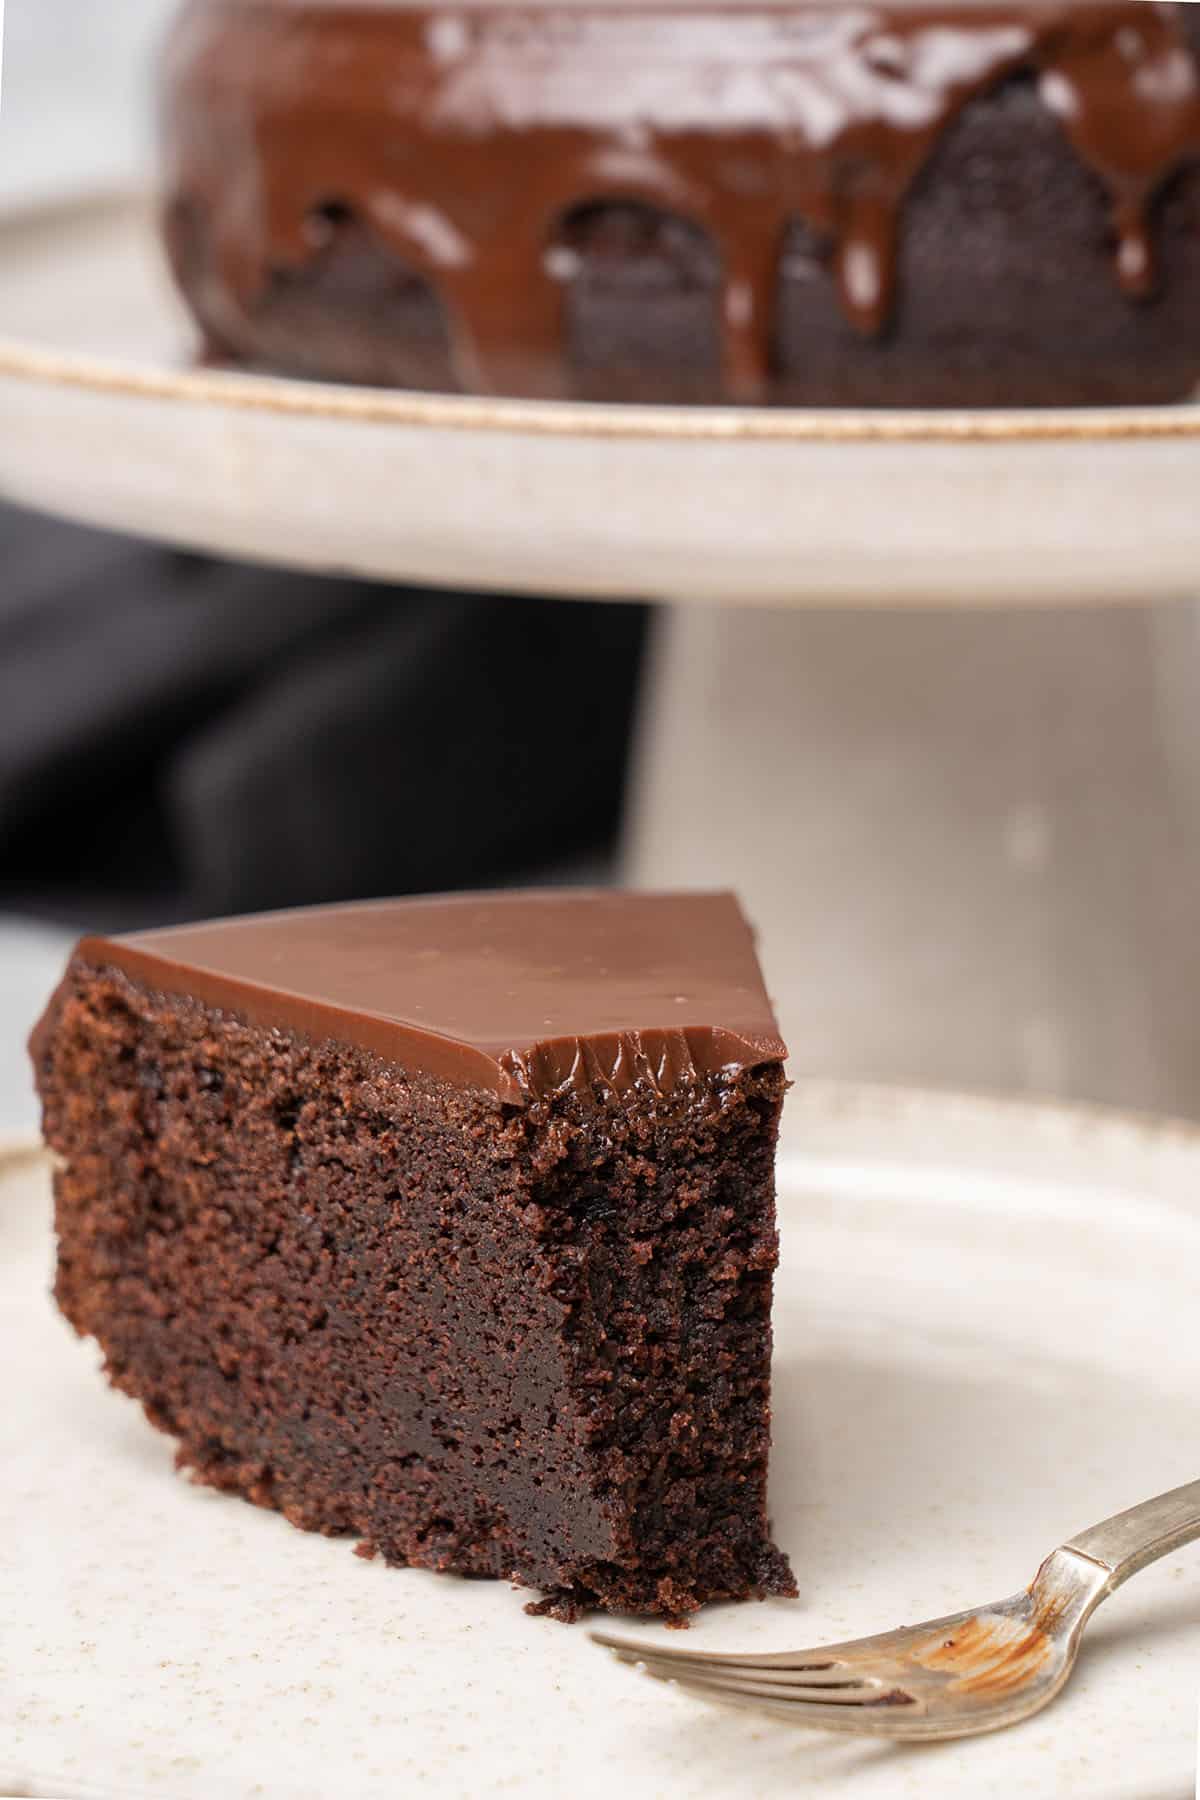 a slice of chocolate ganache cake on a plate.